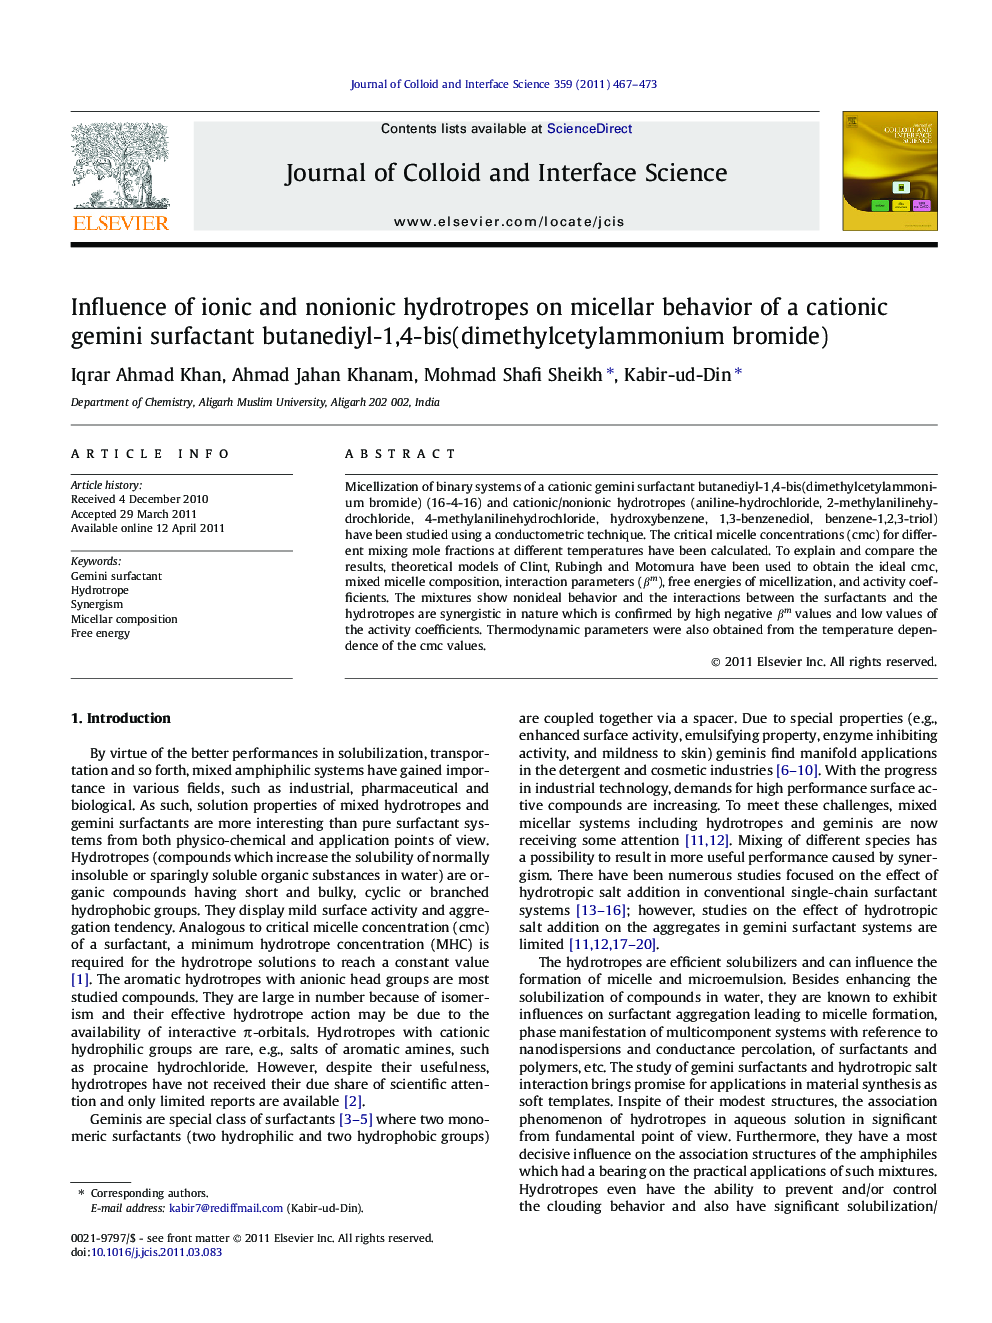 Influence of ionic and nonionic hydrotropes on micellar behavior of a cationic gemini surfactant butanediyl-1,4-bis(dimethylcetylammonium bromide)